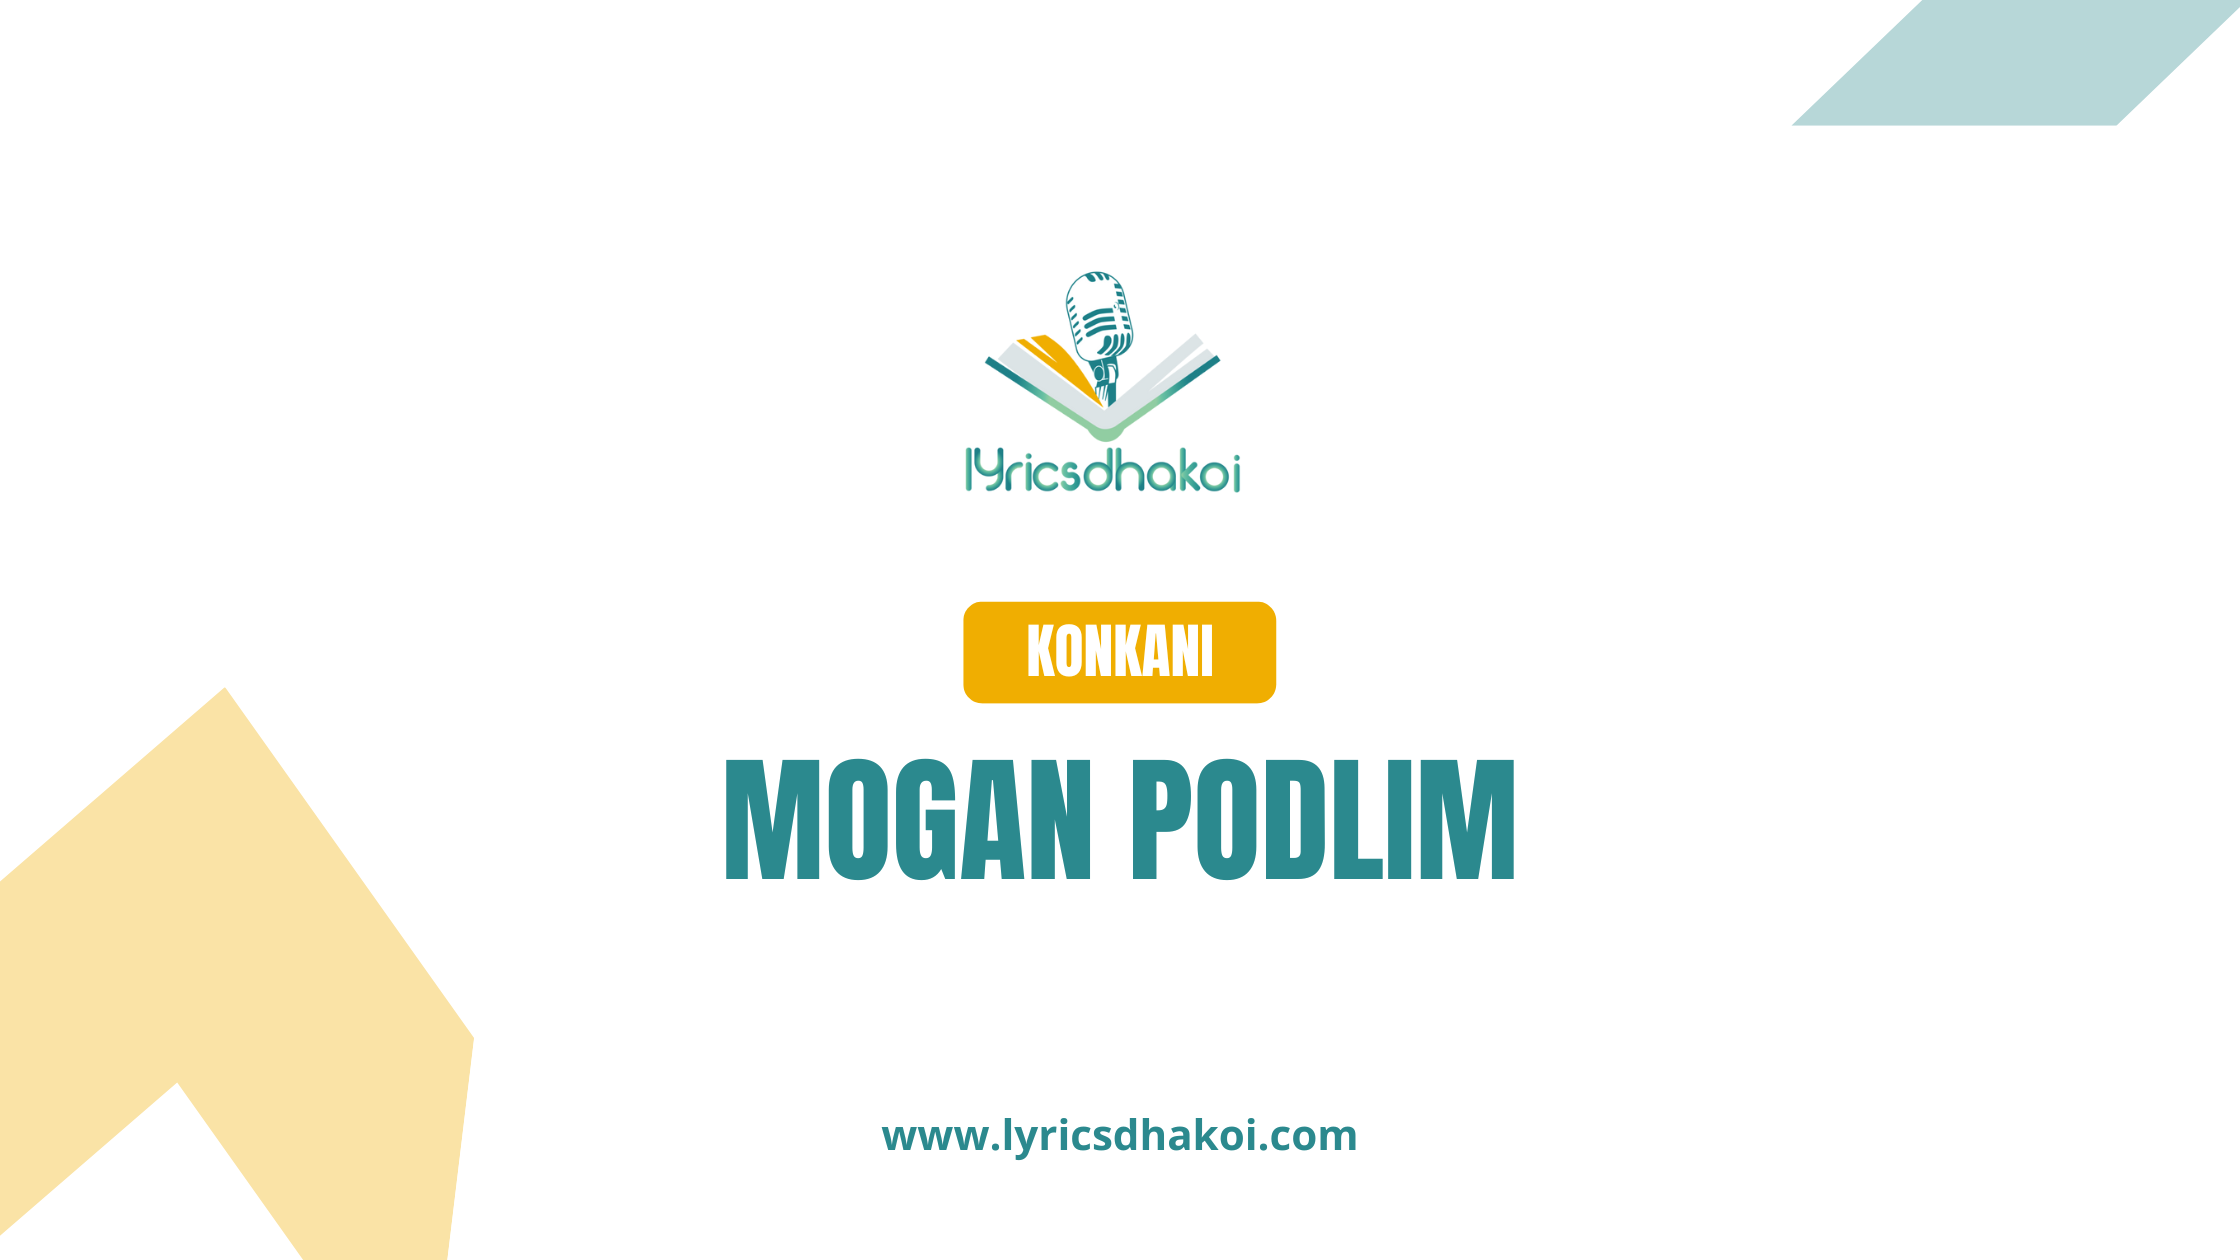 Mogan Podlim Konkani Lyrics for Karaoke Online - LyricsDhakoi.com